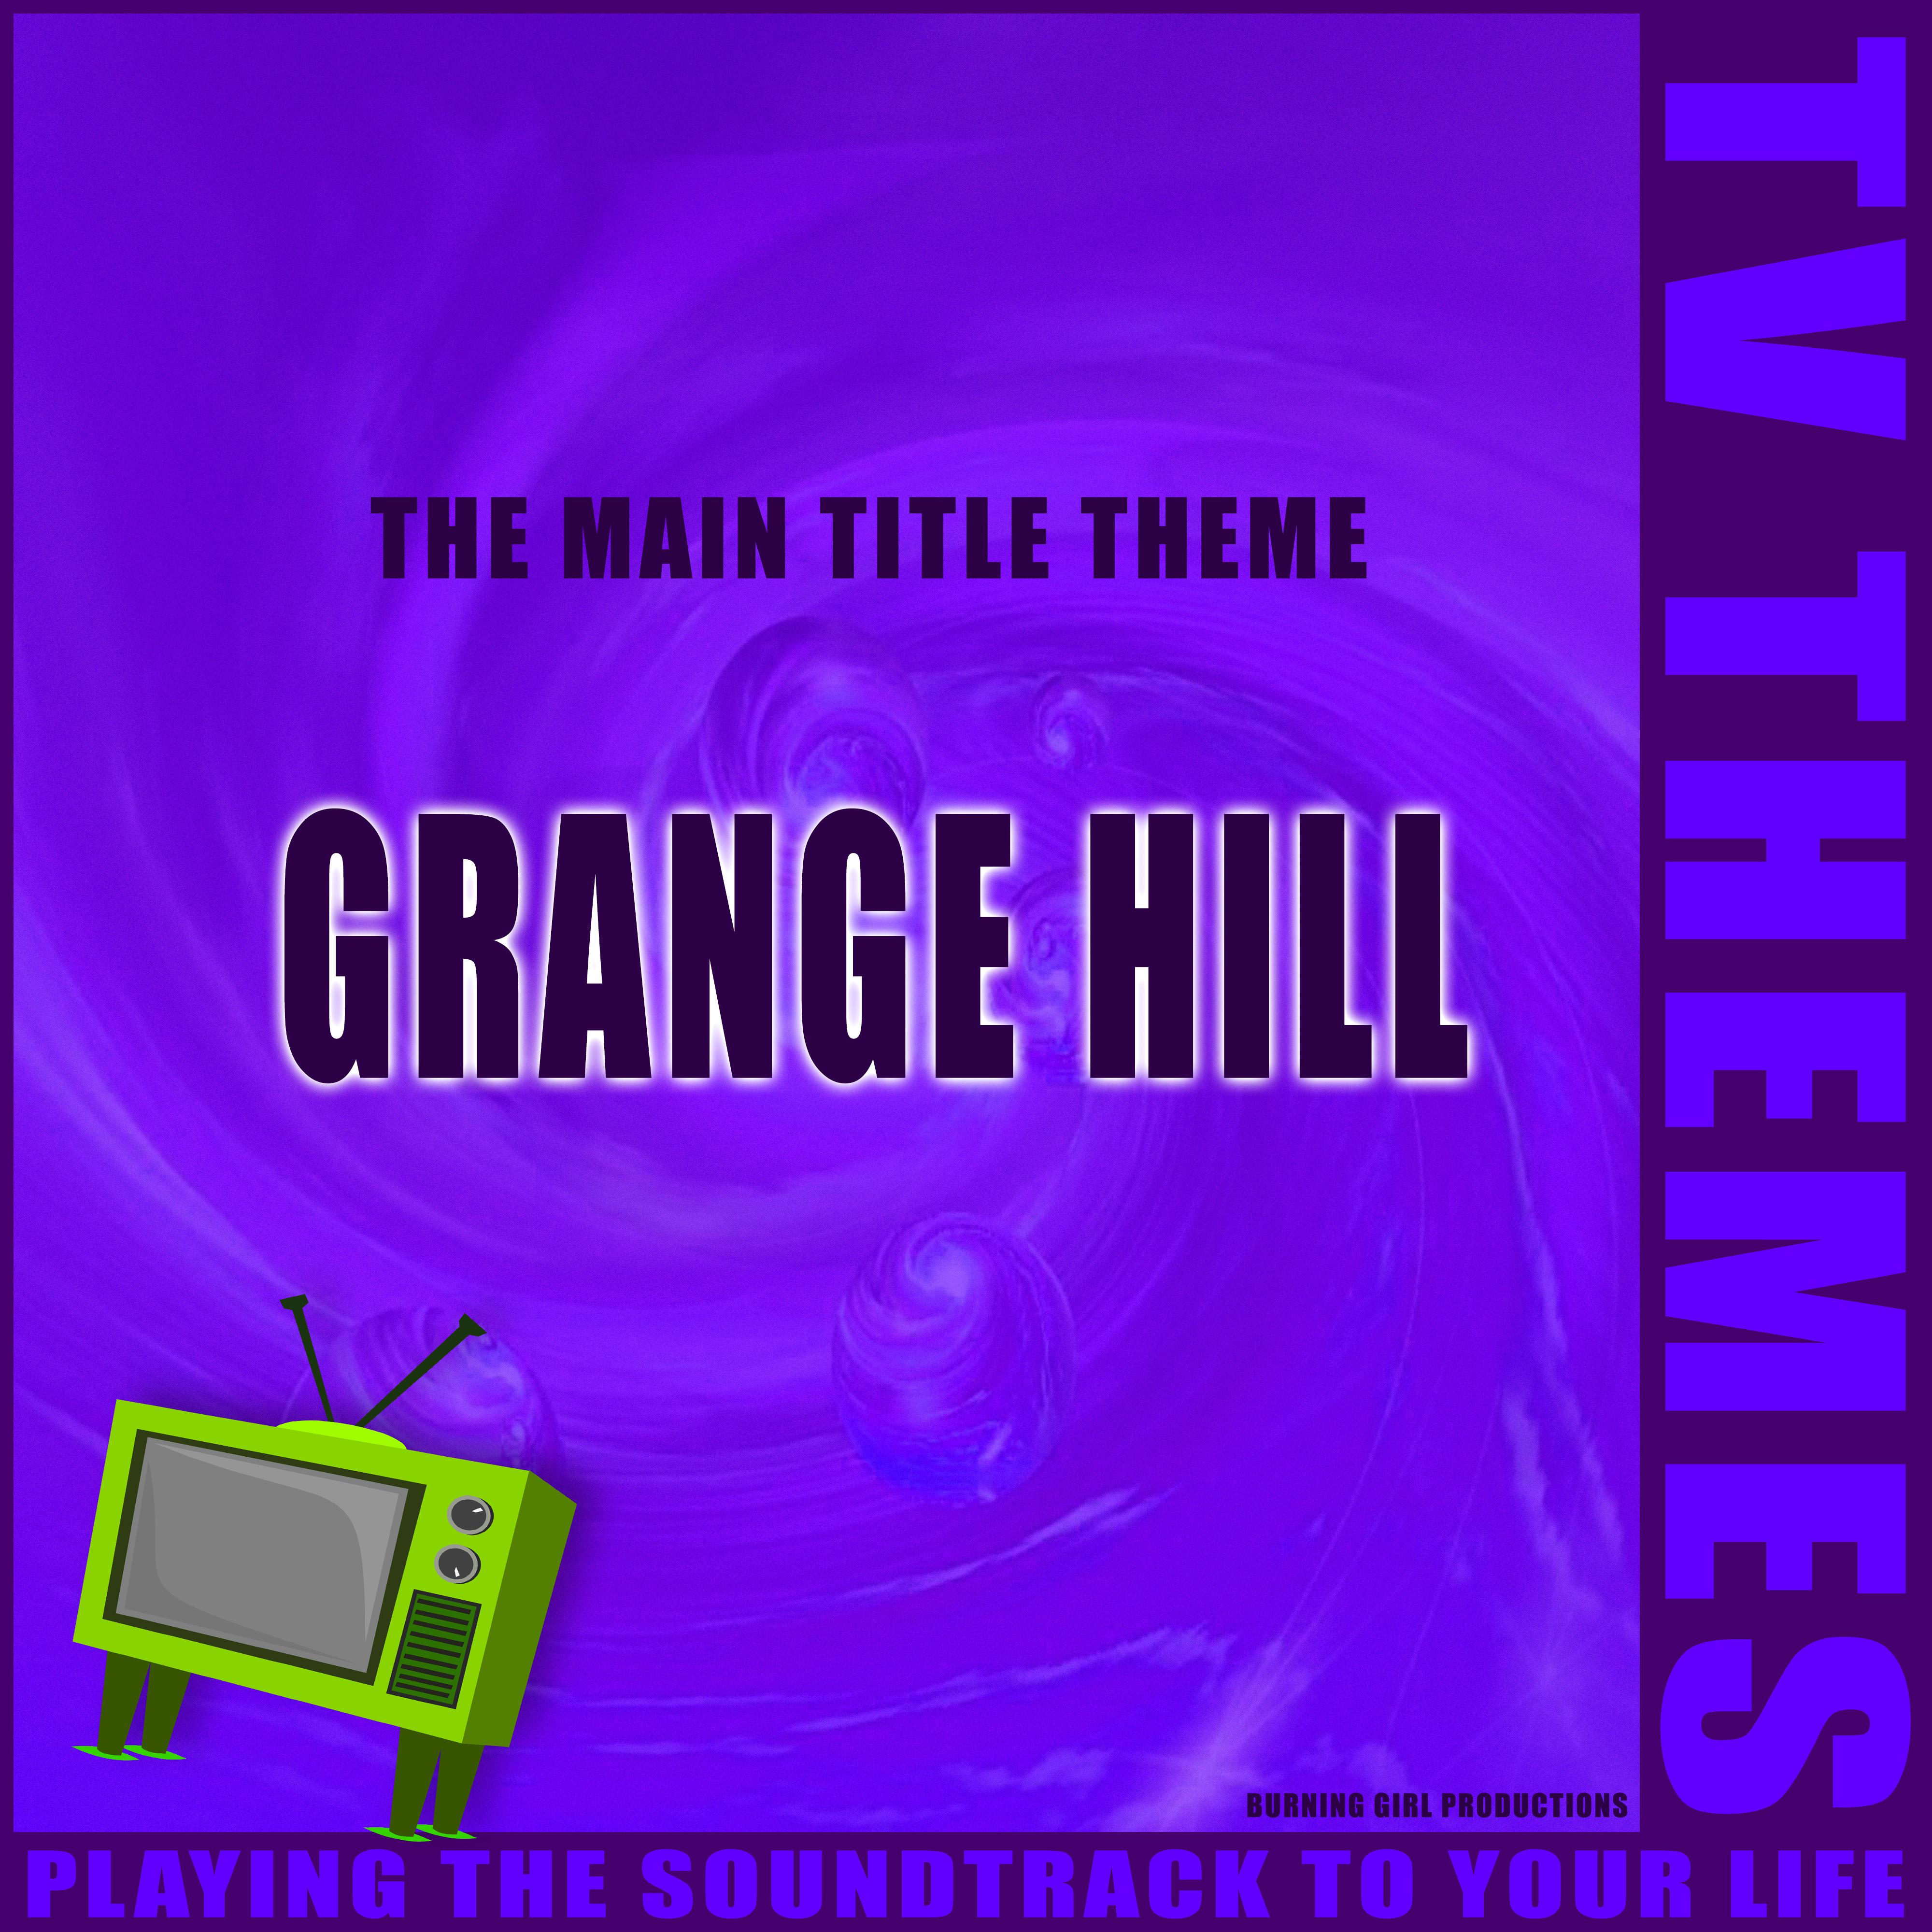 The Main Title Theme - Grange Hill